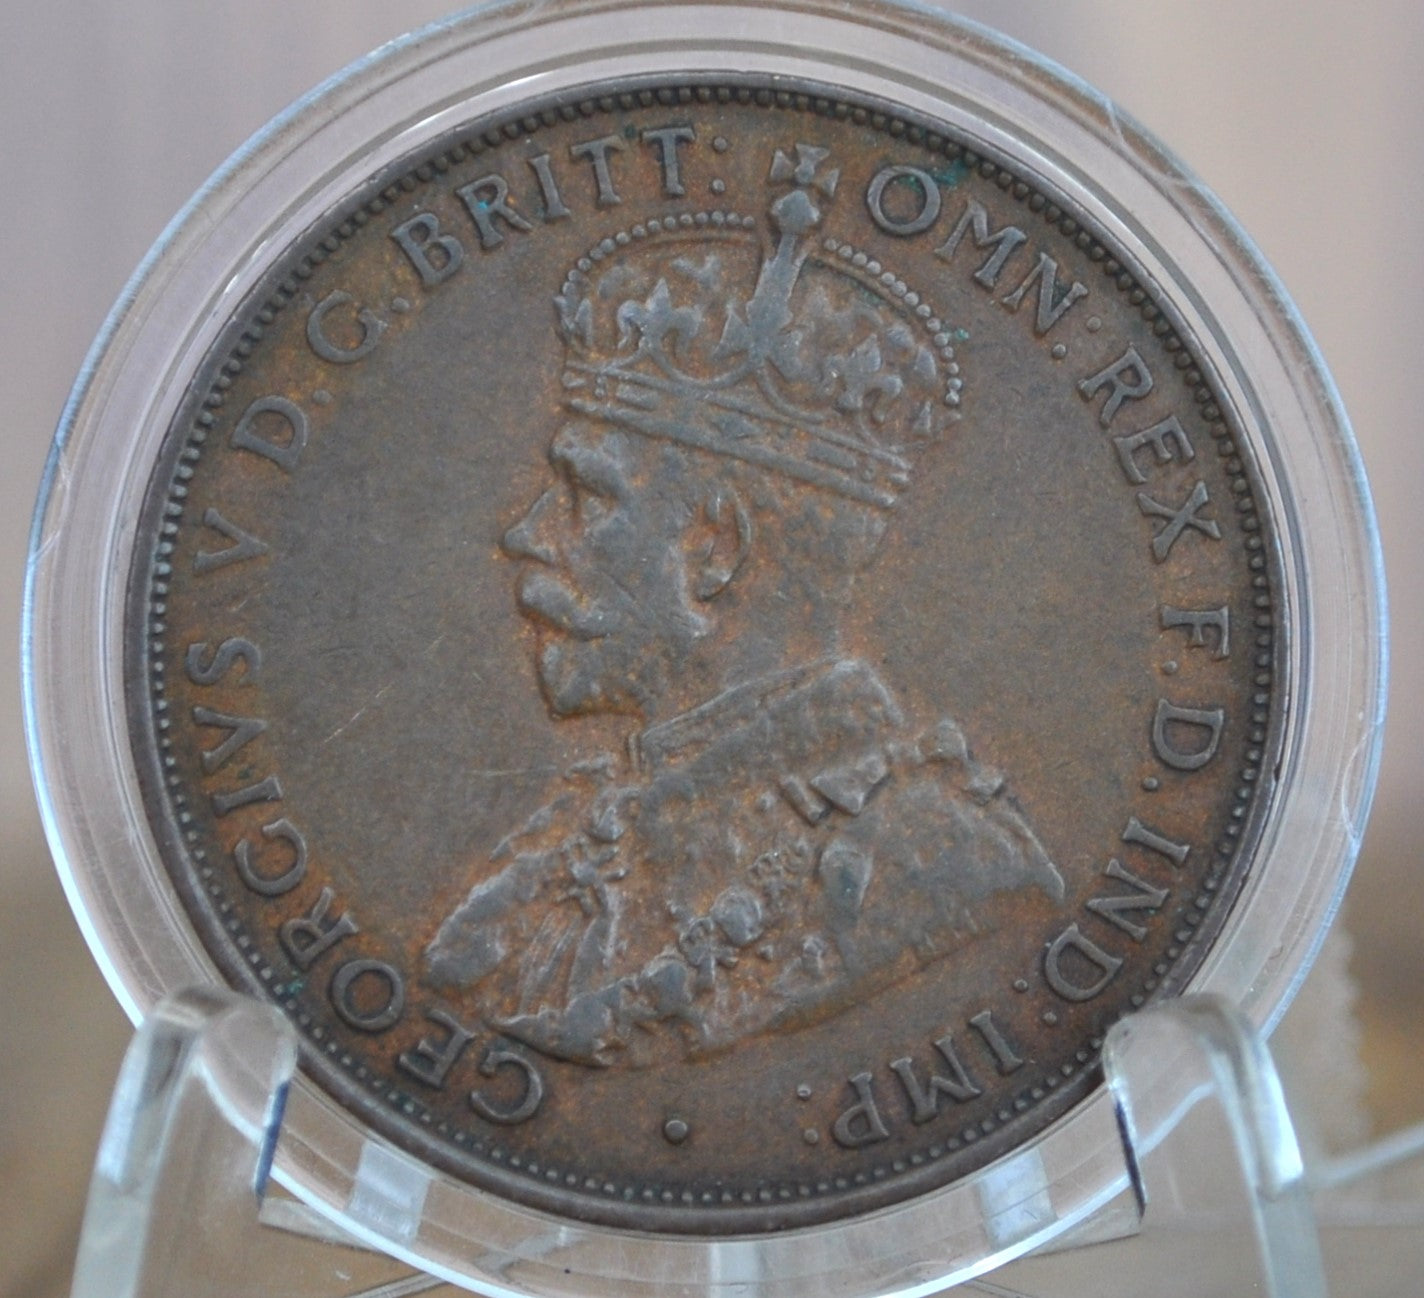 1936 Australian One Penny - XF - King George - Australian One Cent 1936 1 Penny